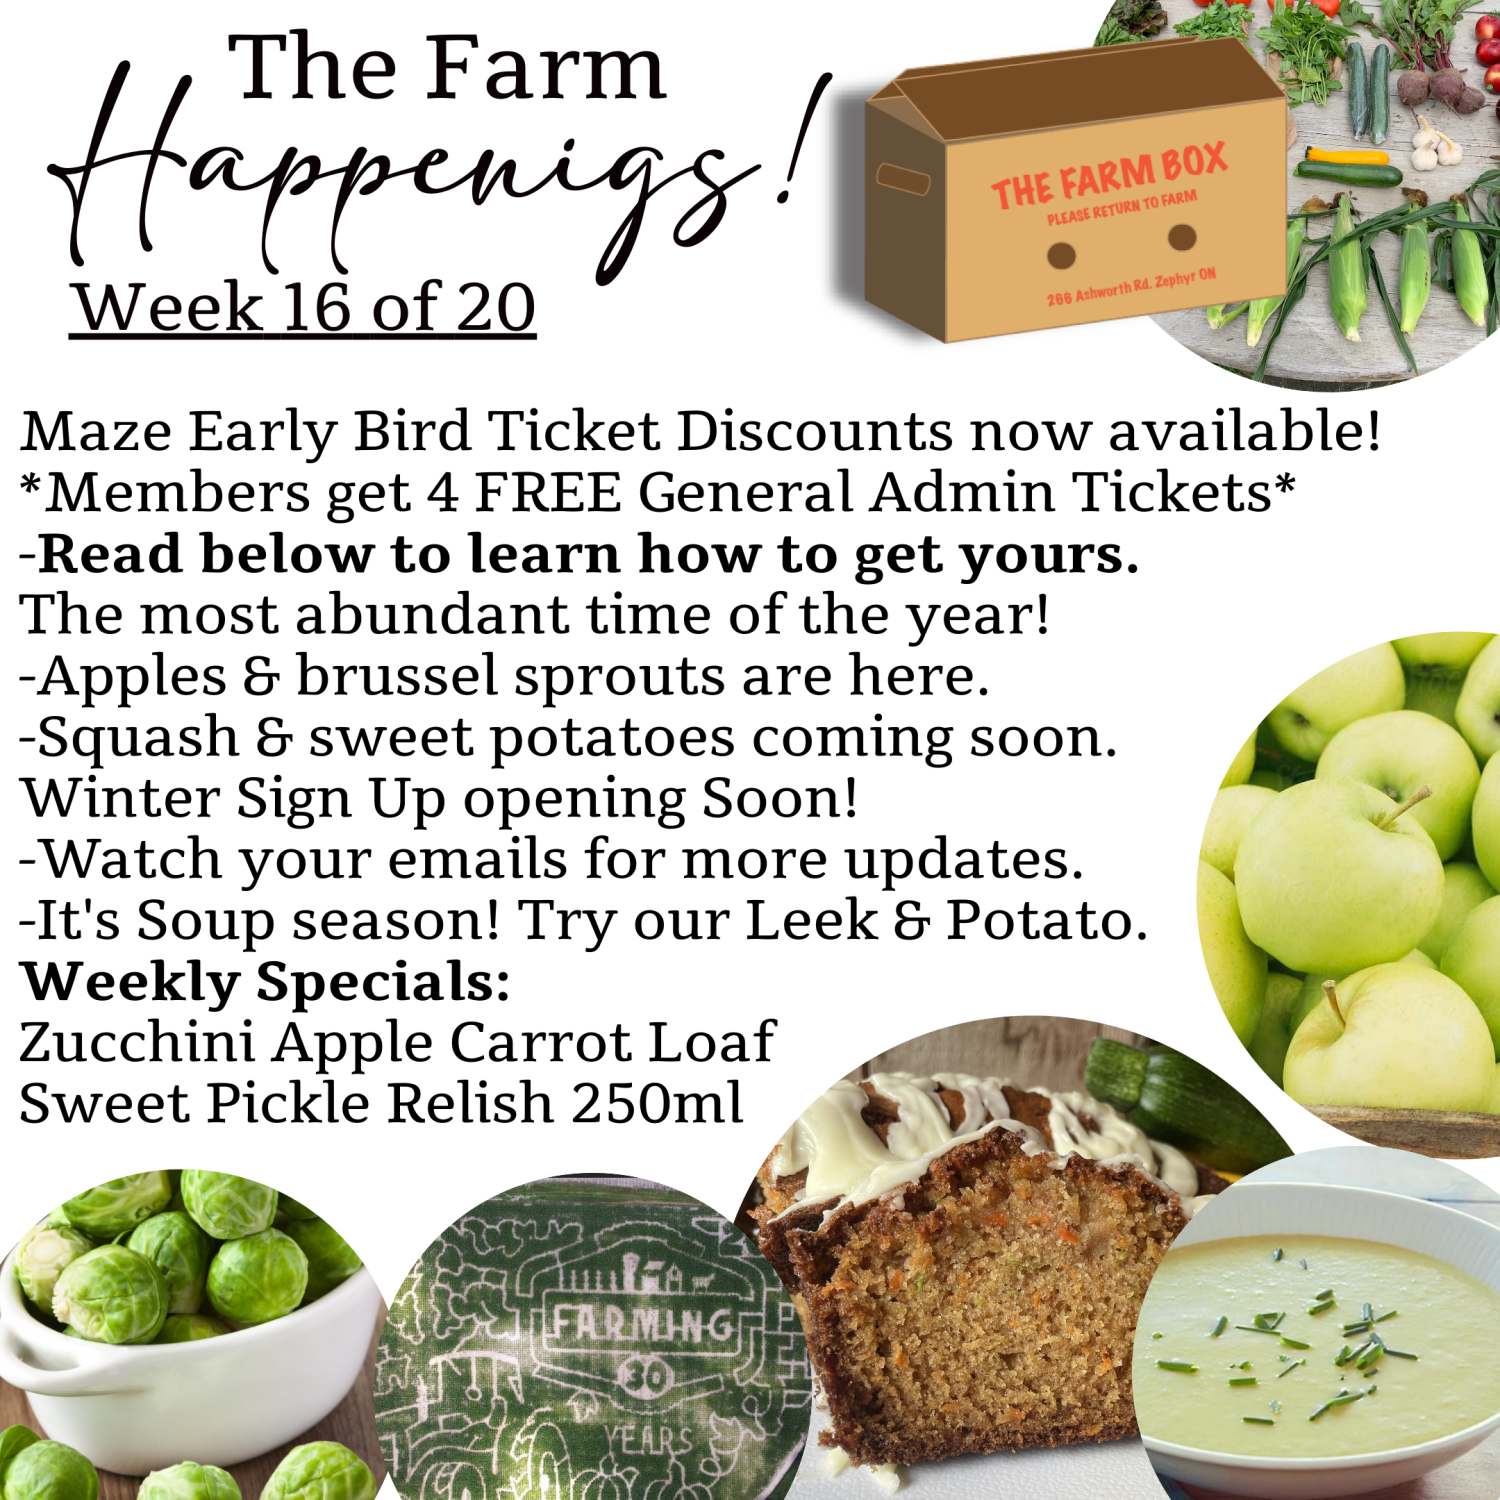 Next Happening: "The Farm Box"-Coopers CSA Farm Farm Happenings Week 16